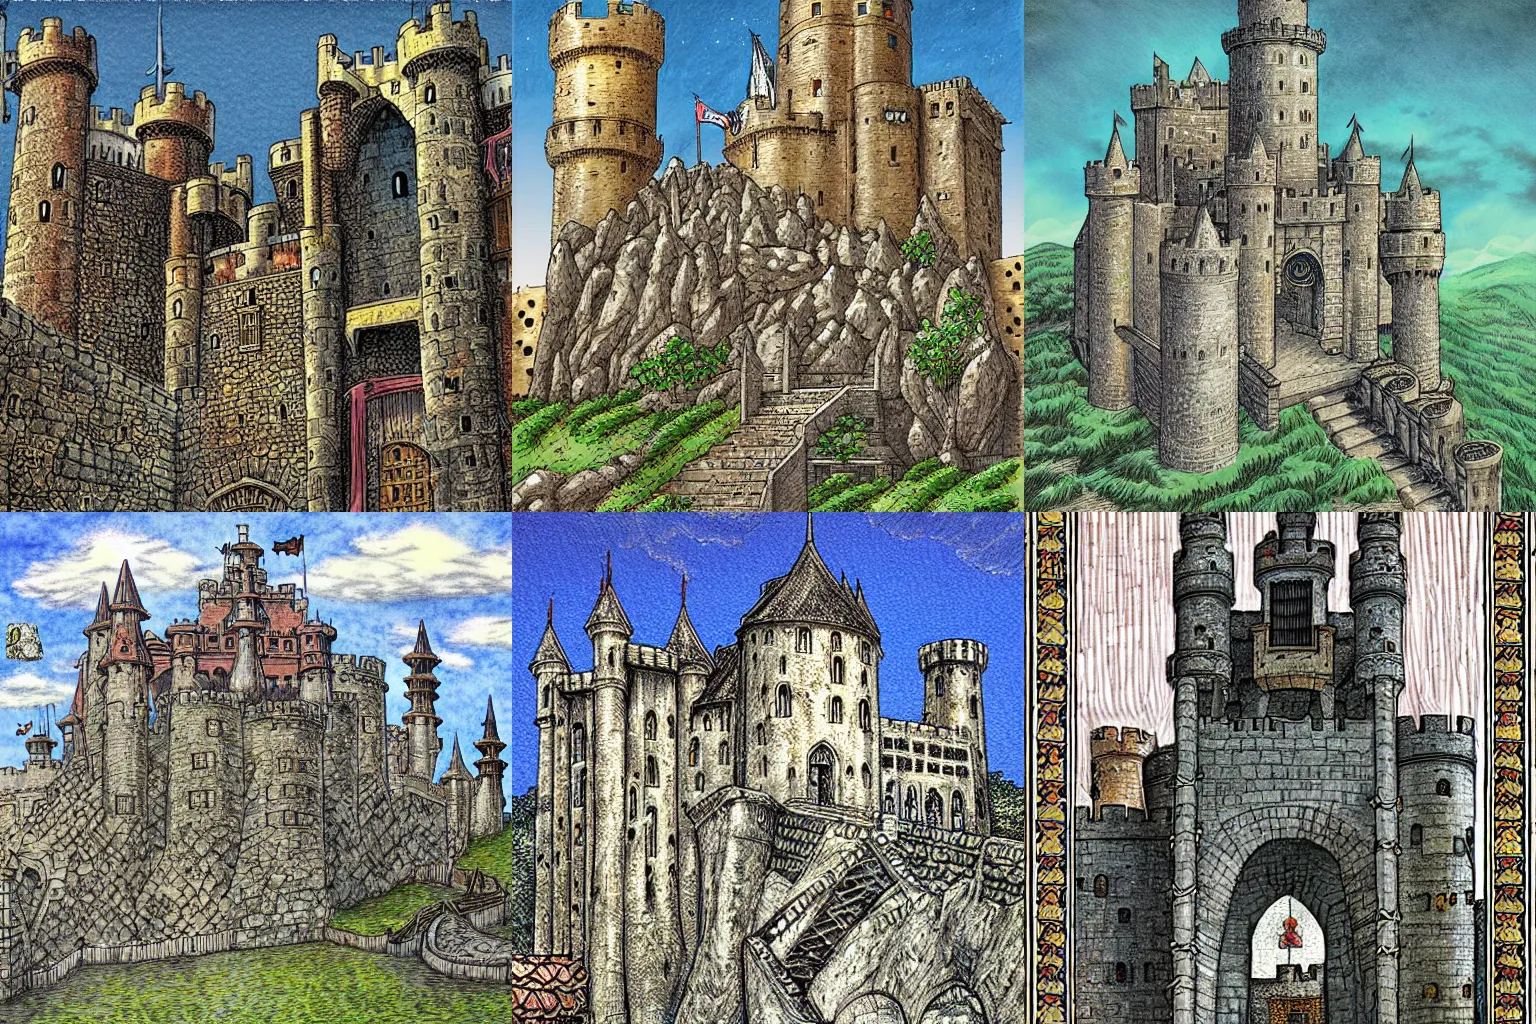 Prompt: medieval castle, colored, by Kentaro Miura